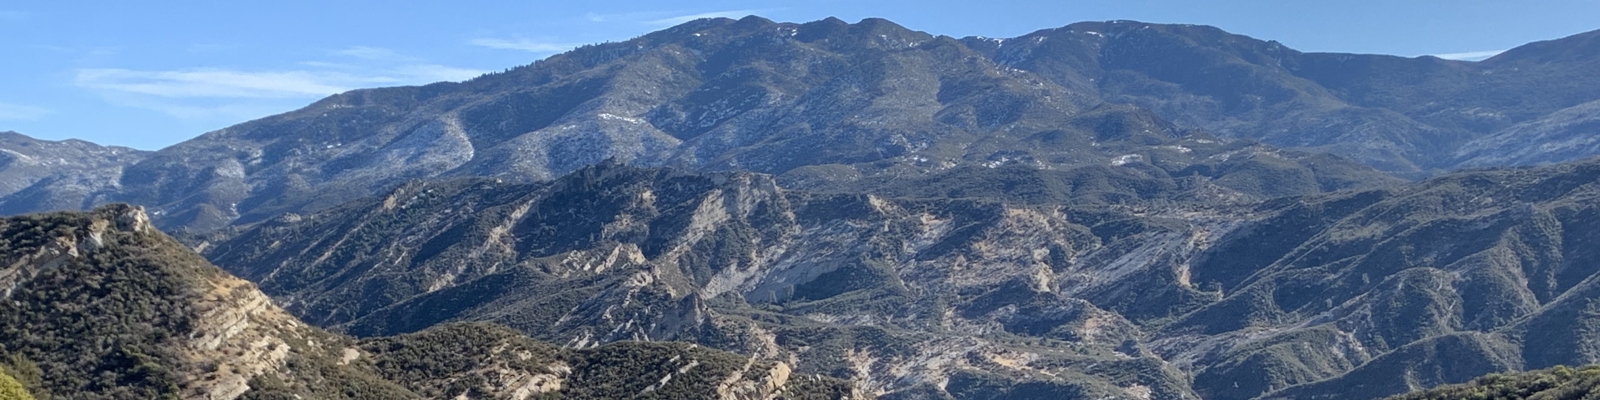 View of San Rafael Mountain from Hurricane Deck